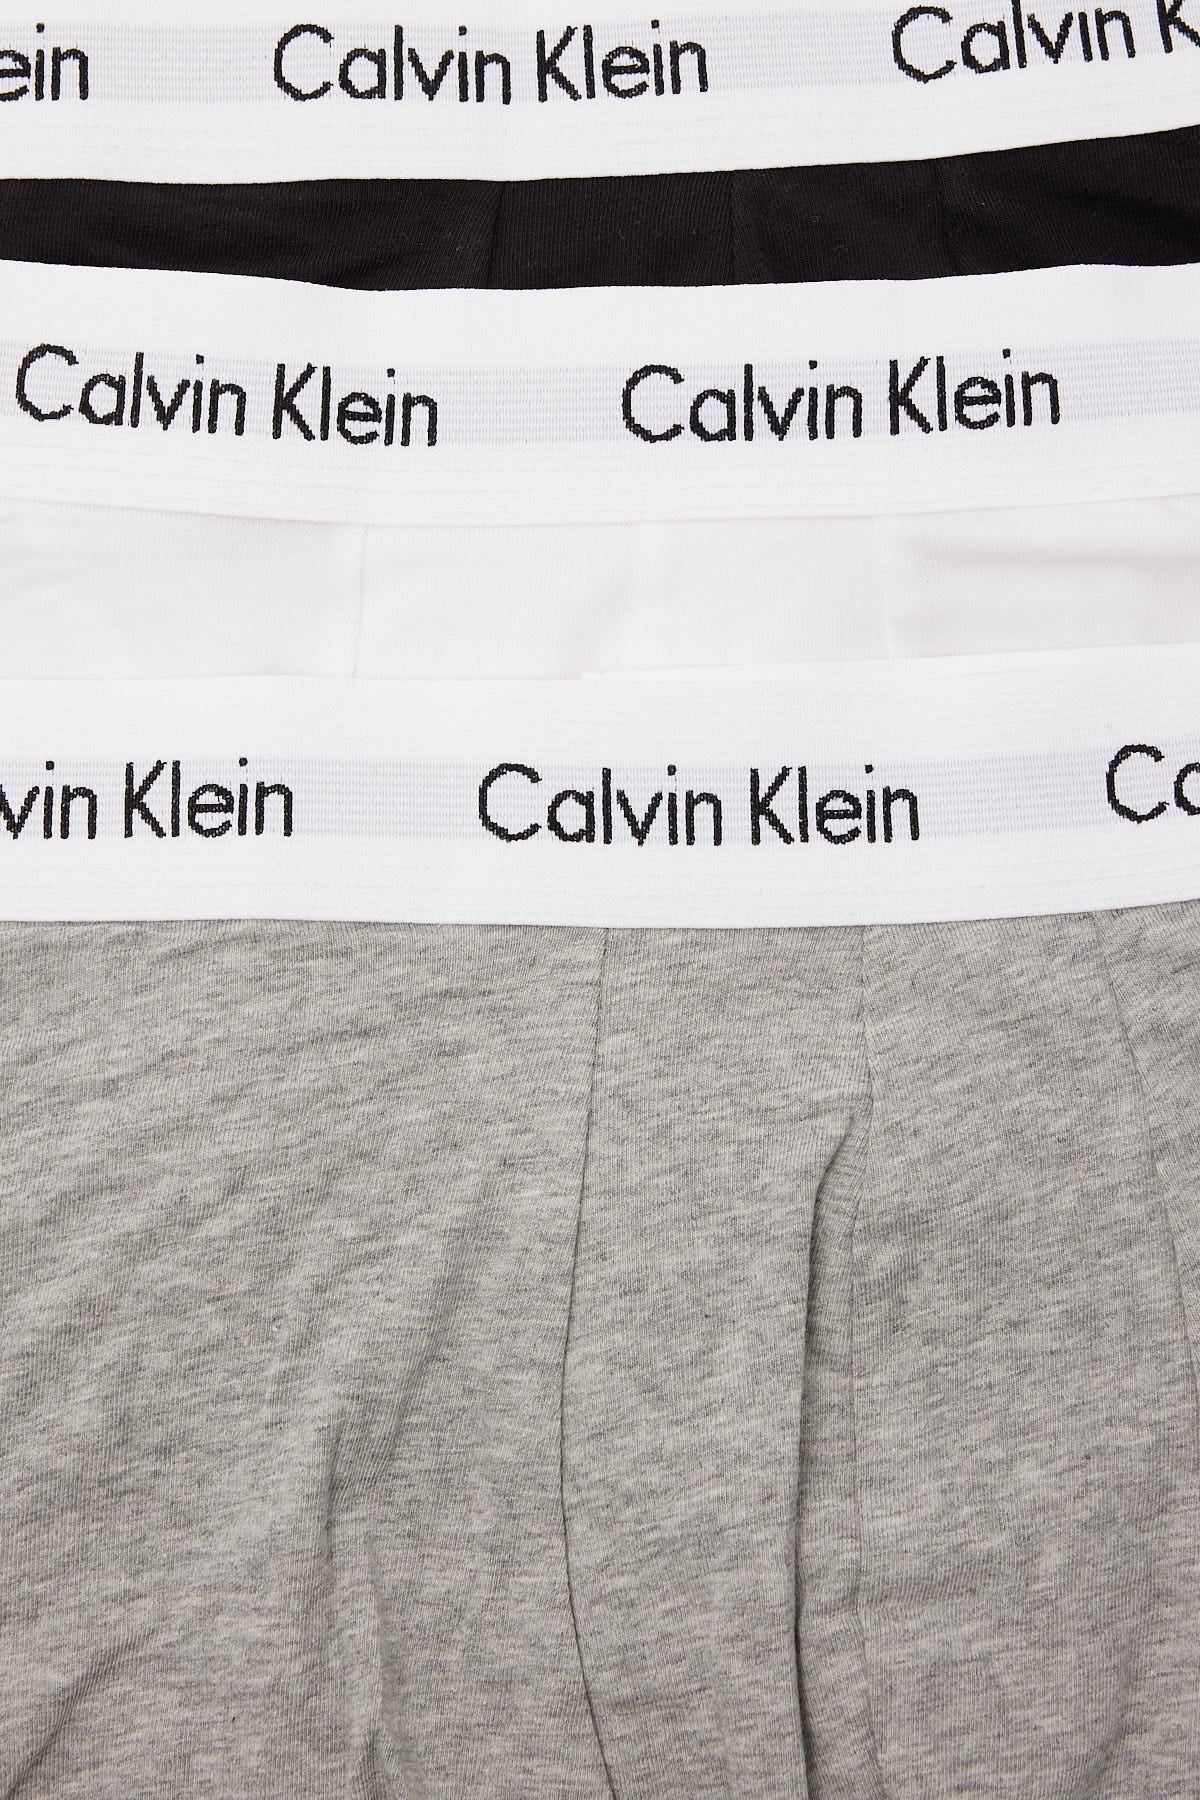 Calvin Klein Cotton Stretch Trunk 3 Pack Assorted